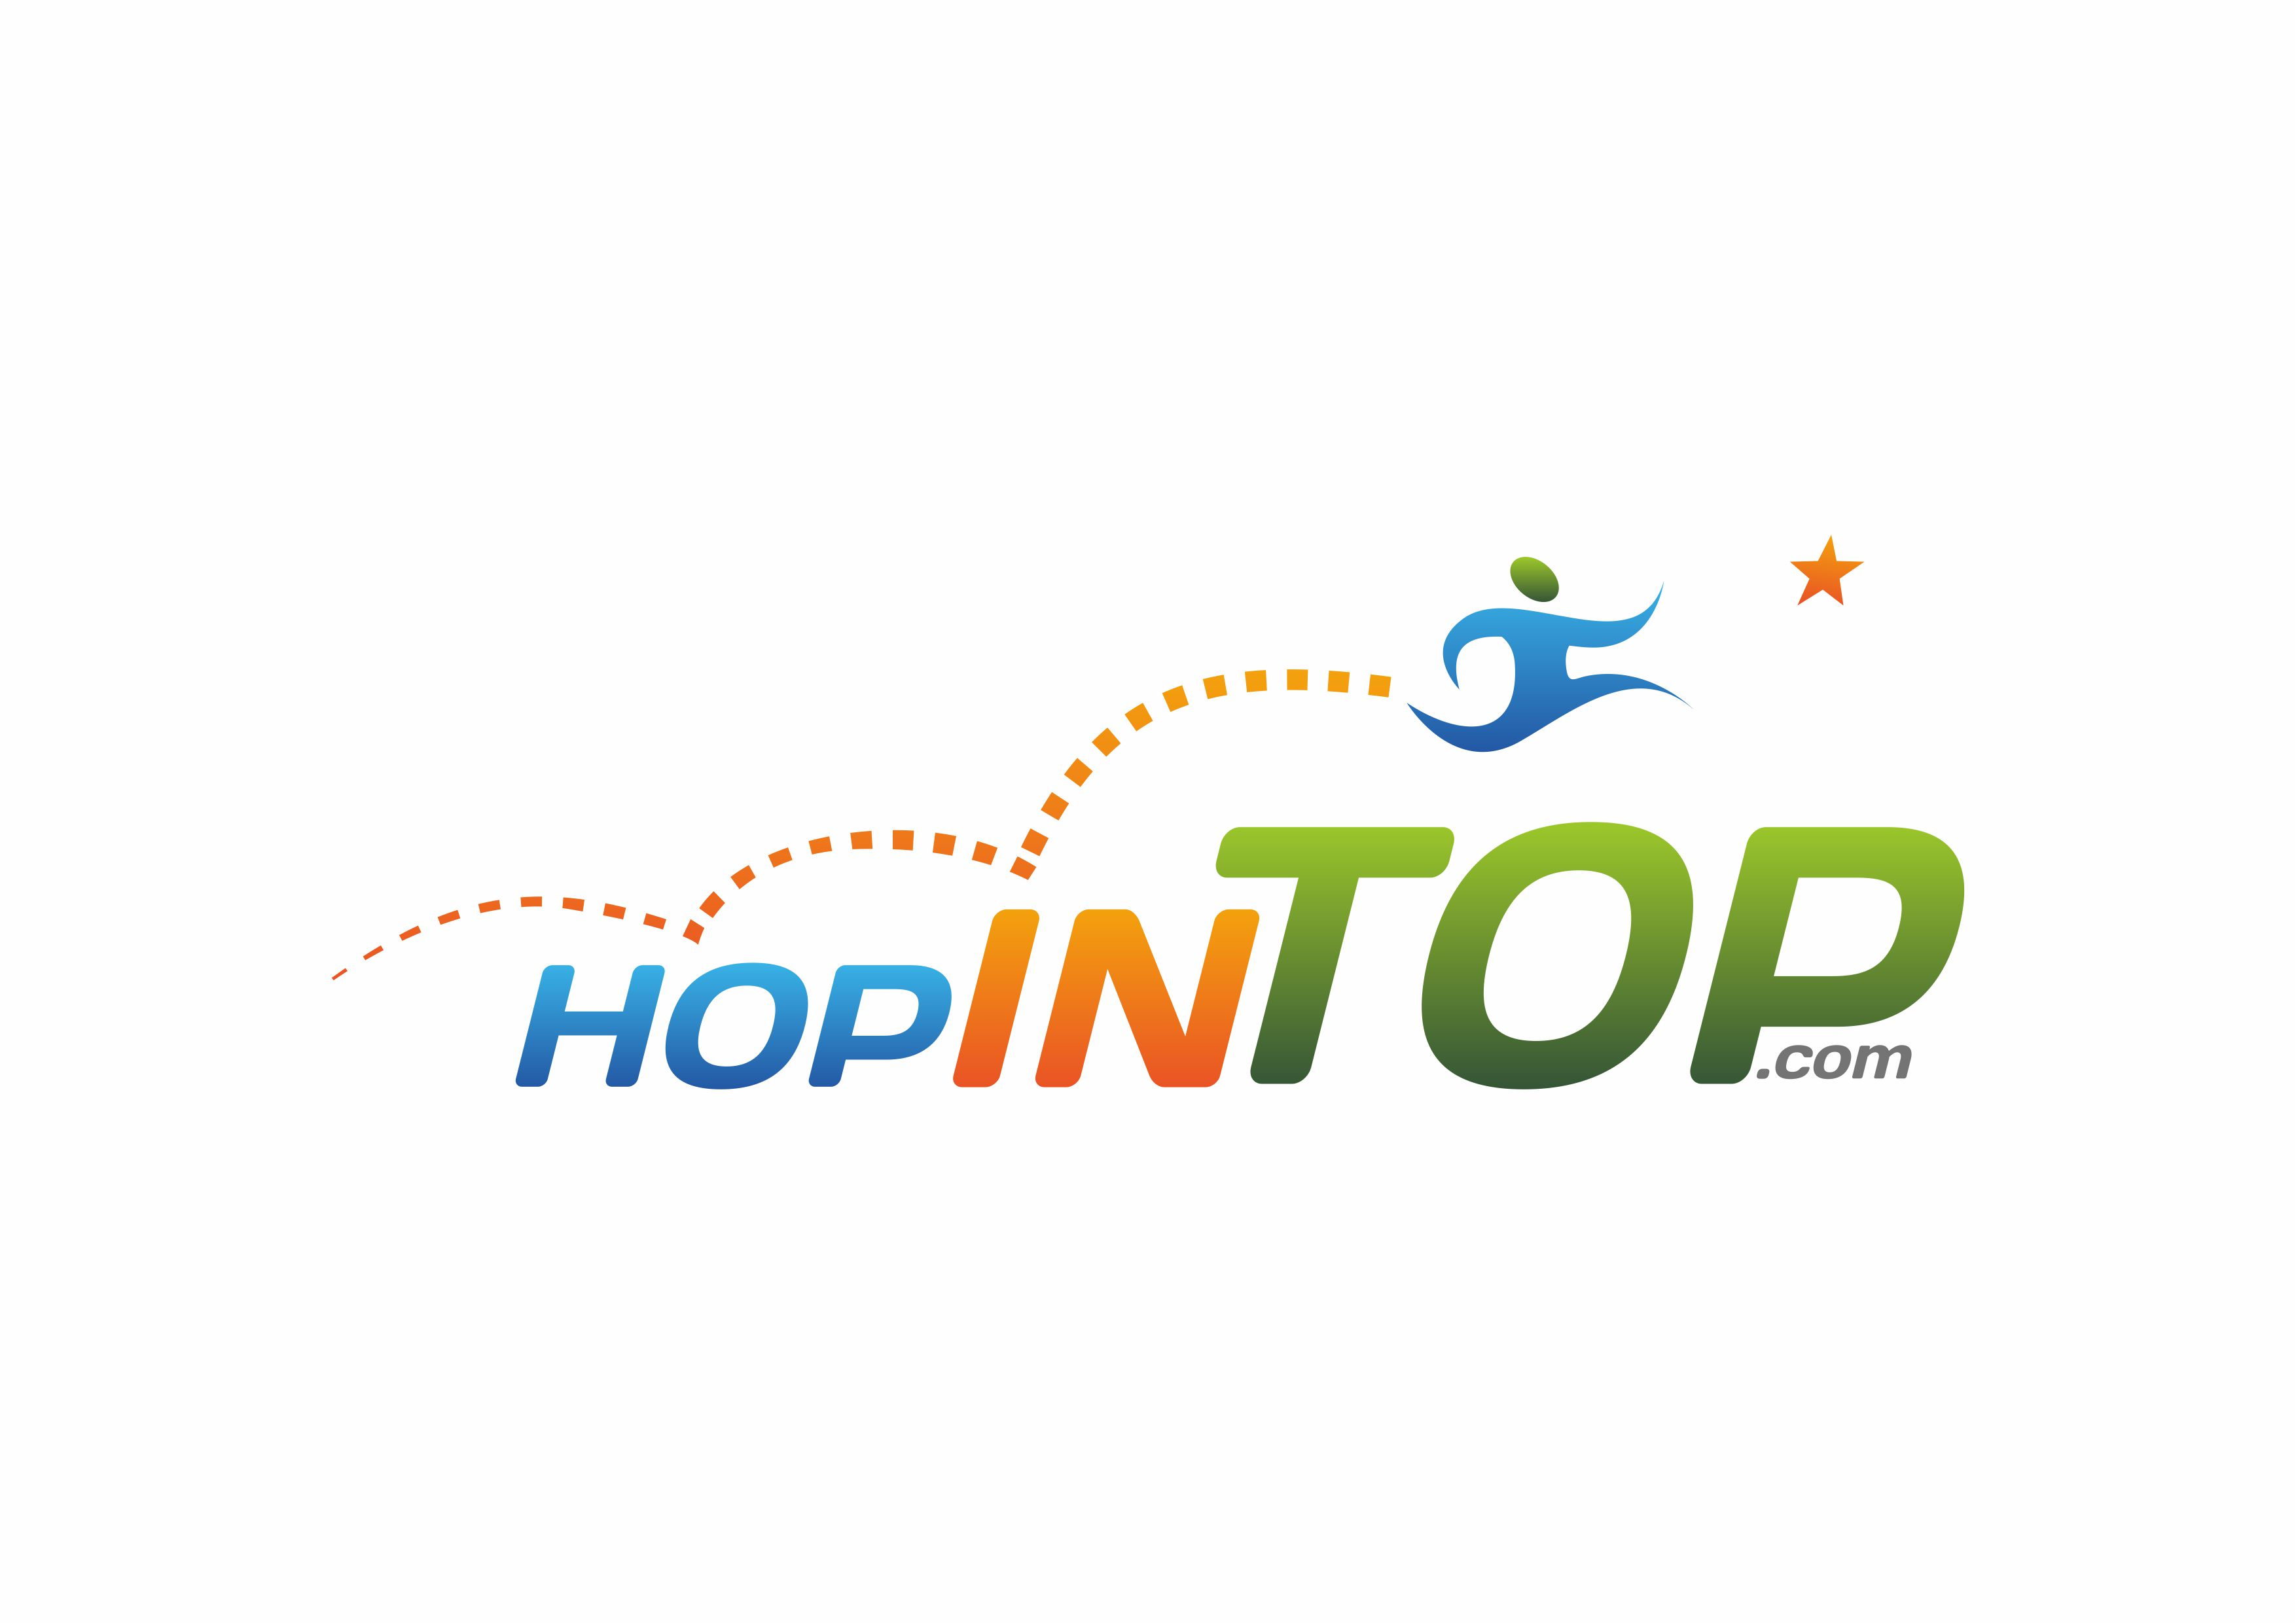 HopInTop Logo